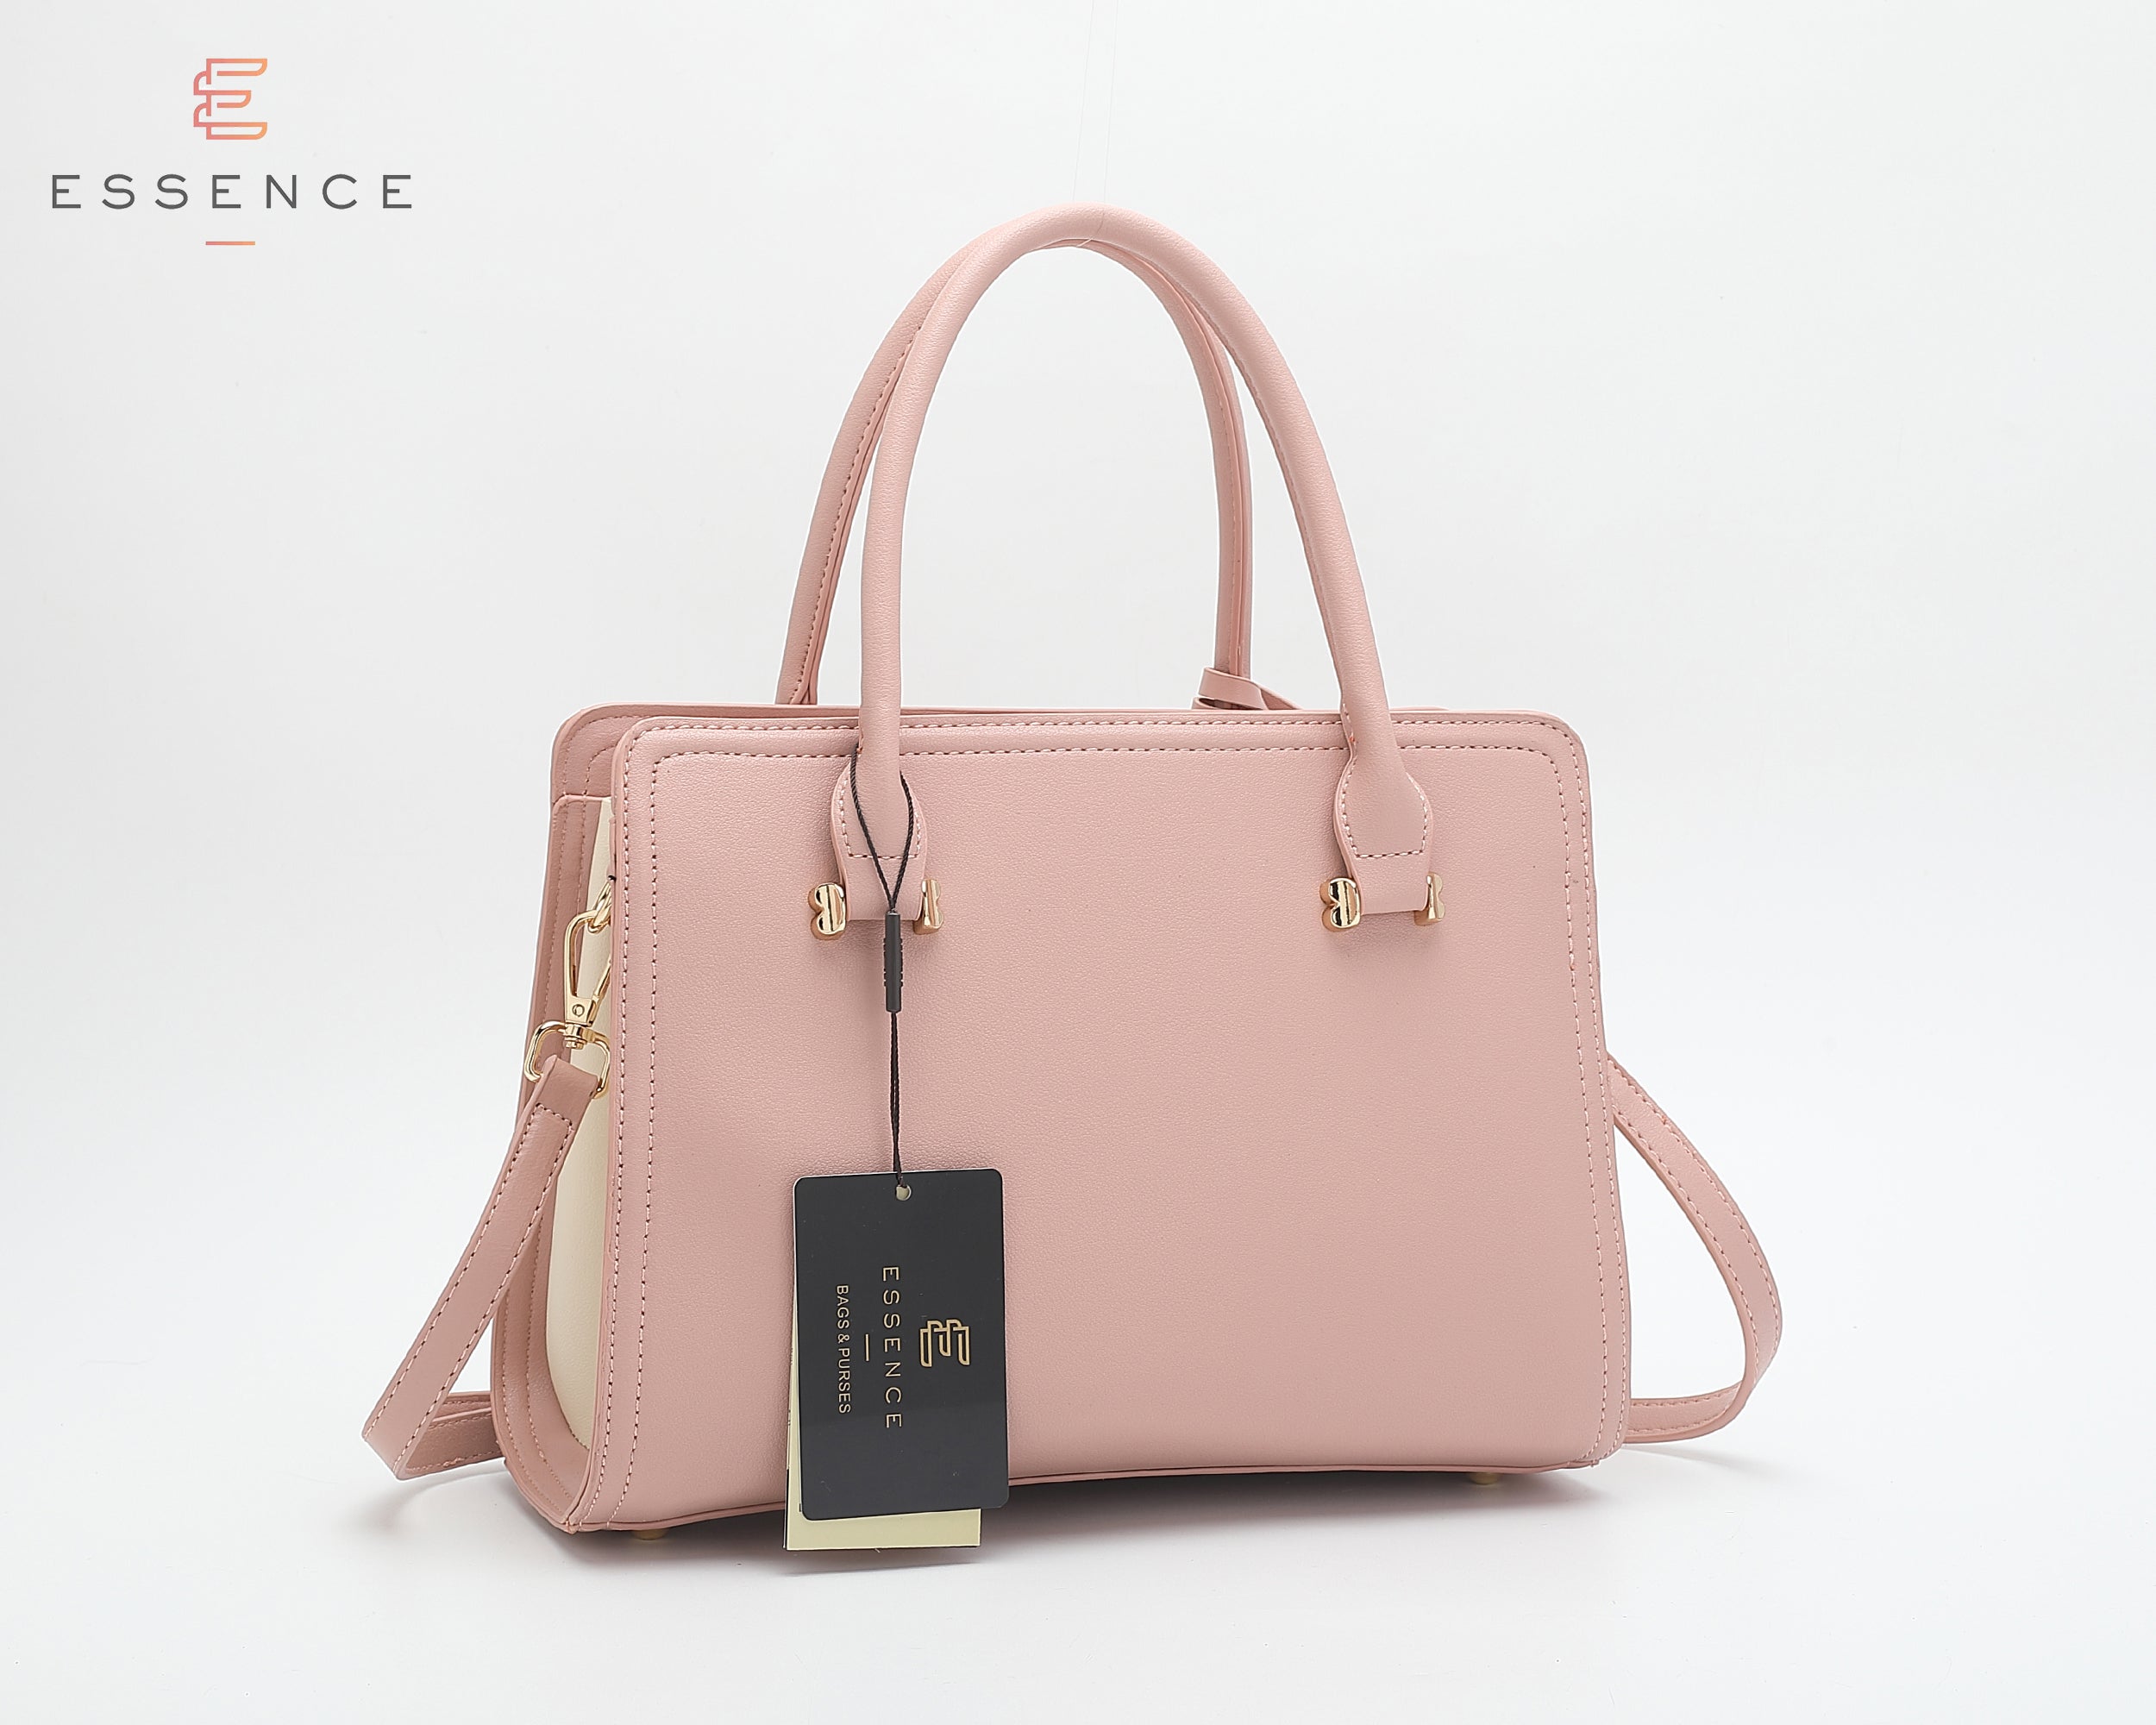 light-pink-handbag | Amy's Handcraft